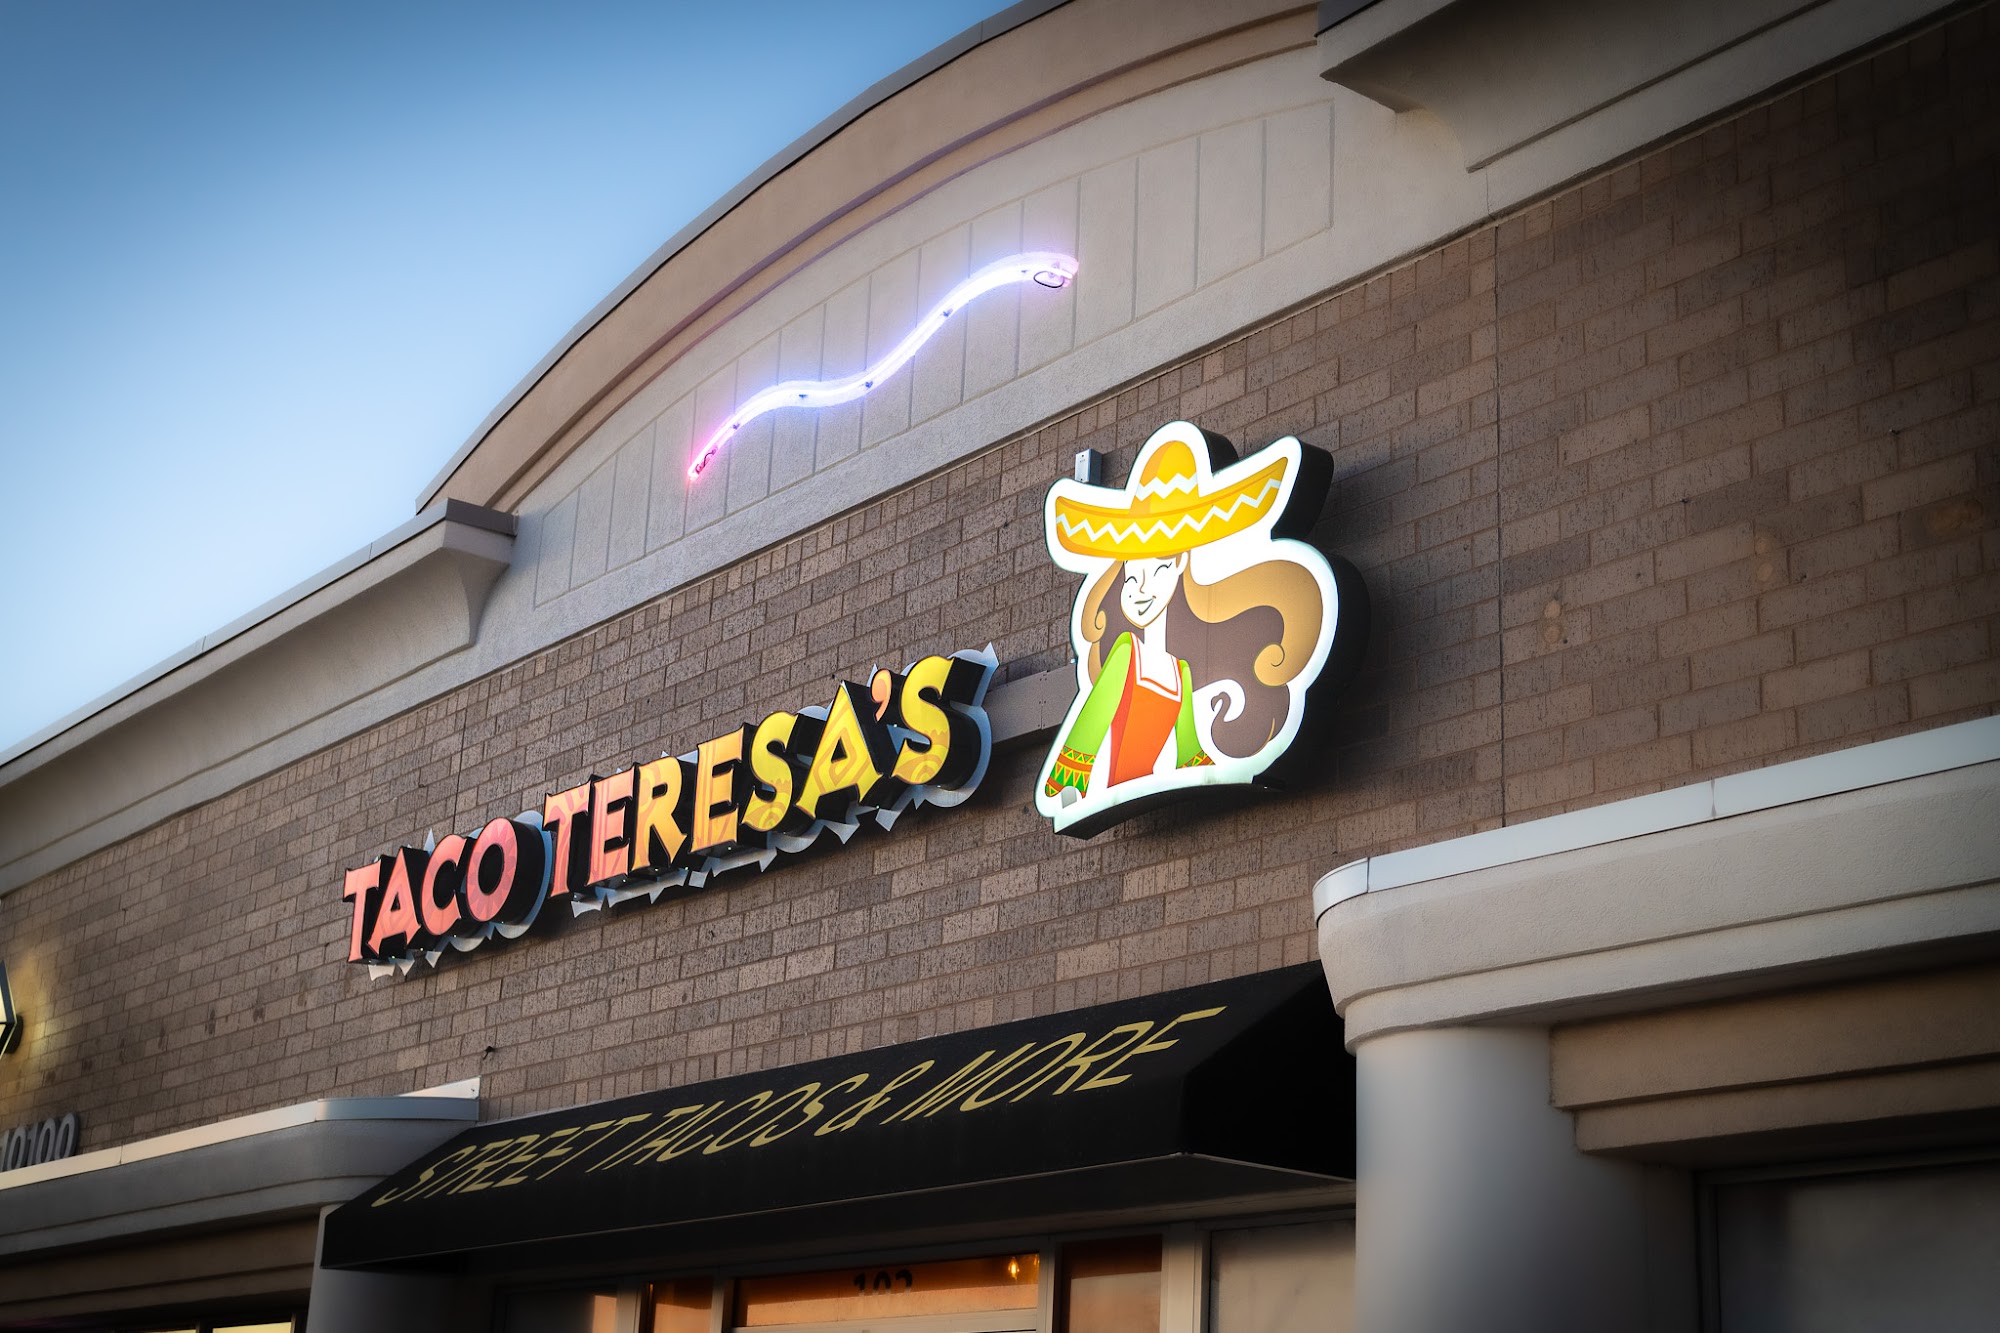 Taco Teresa's